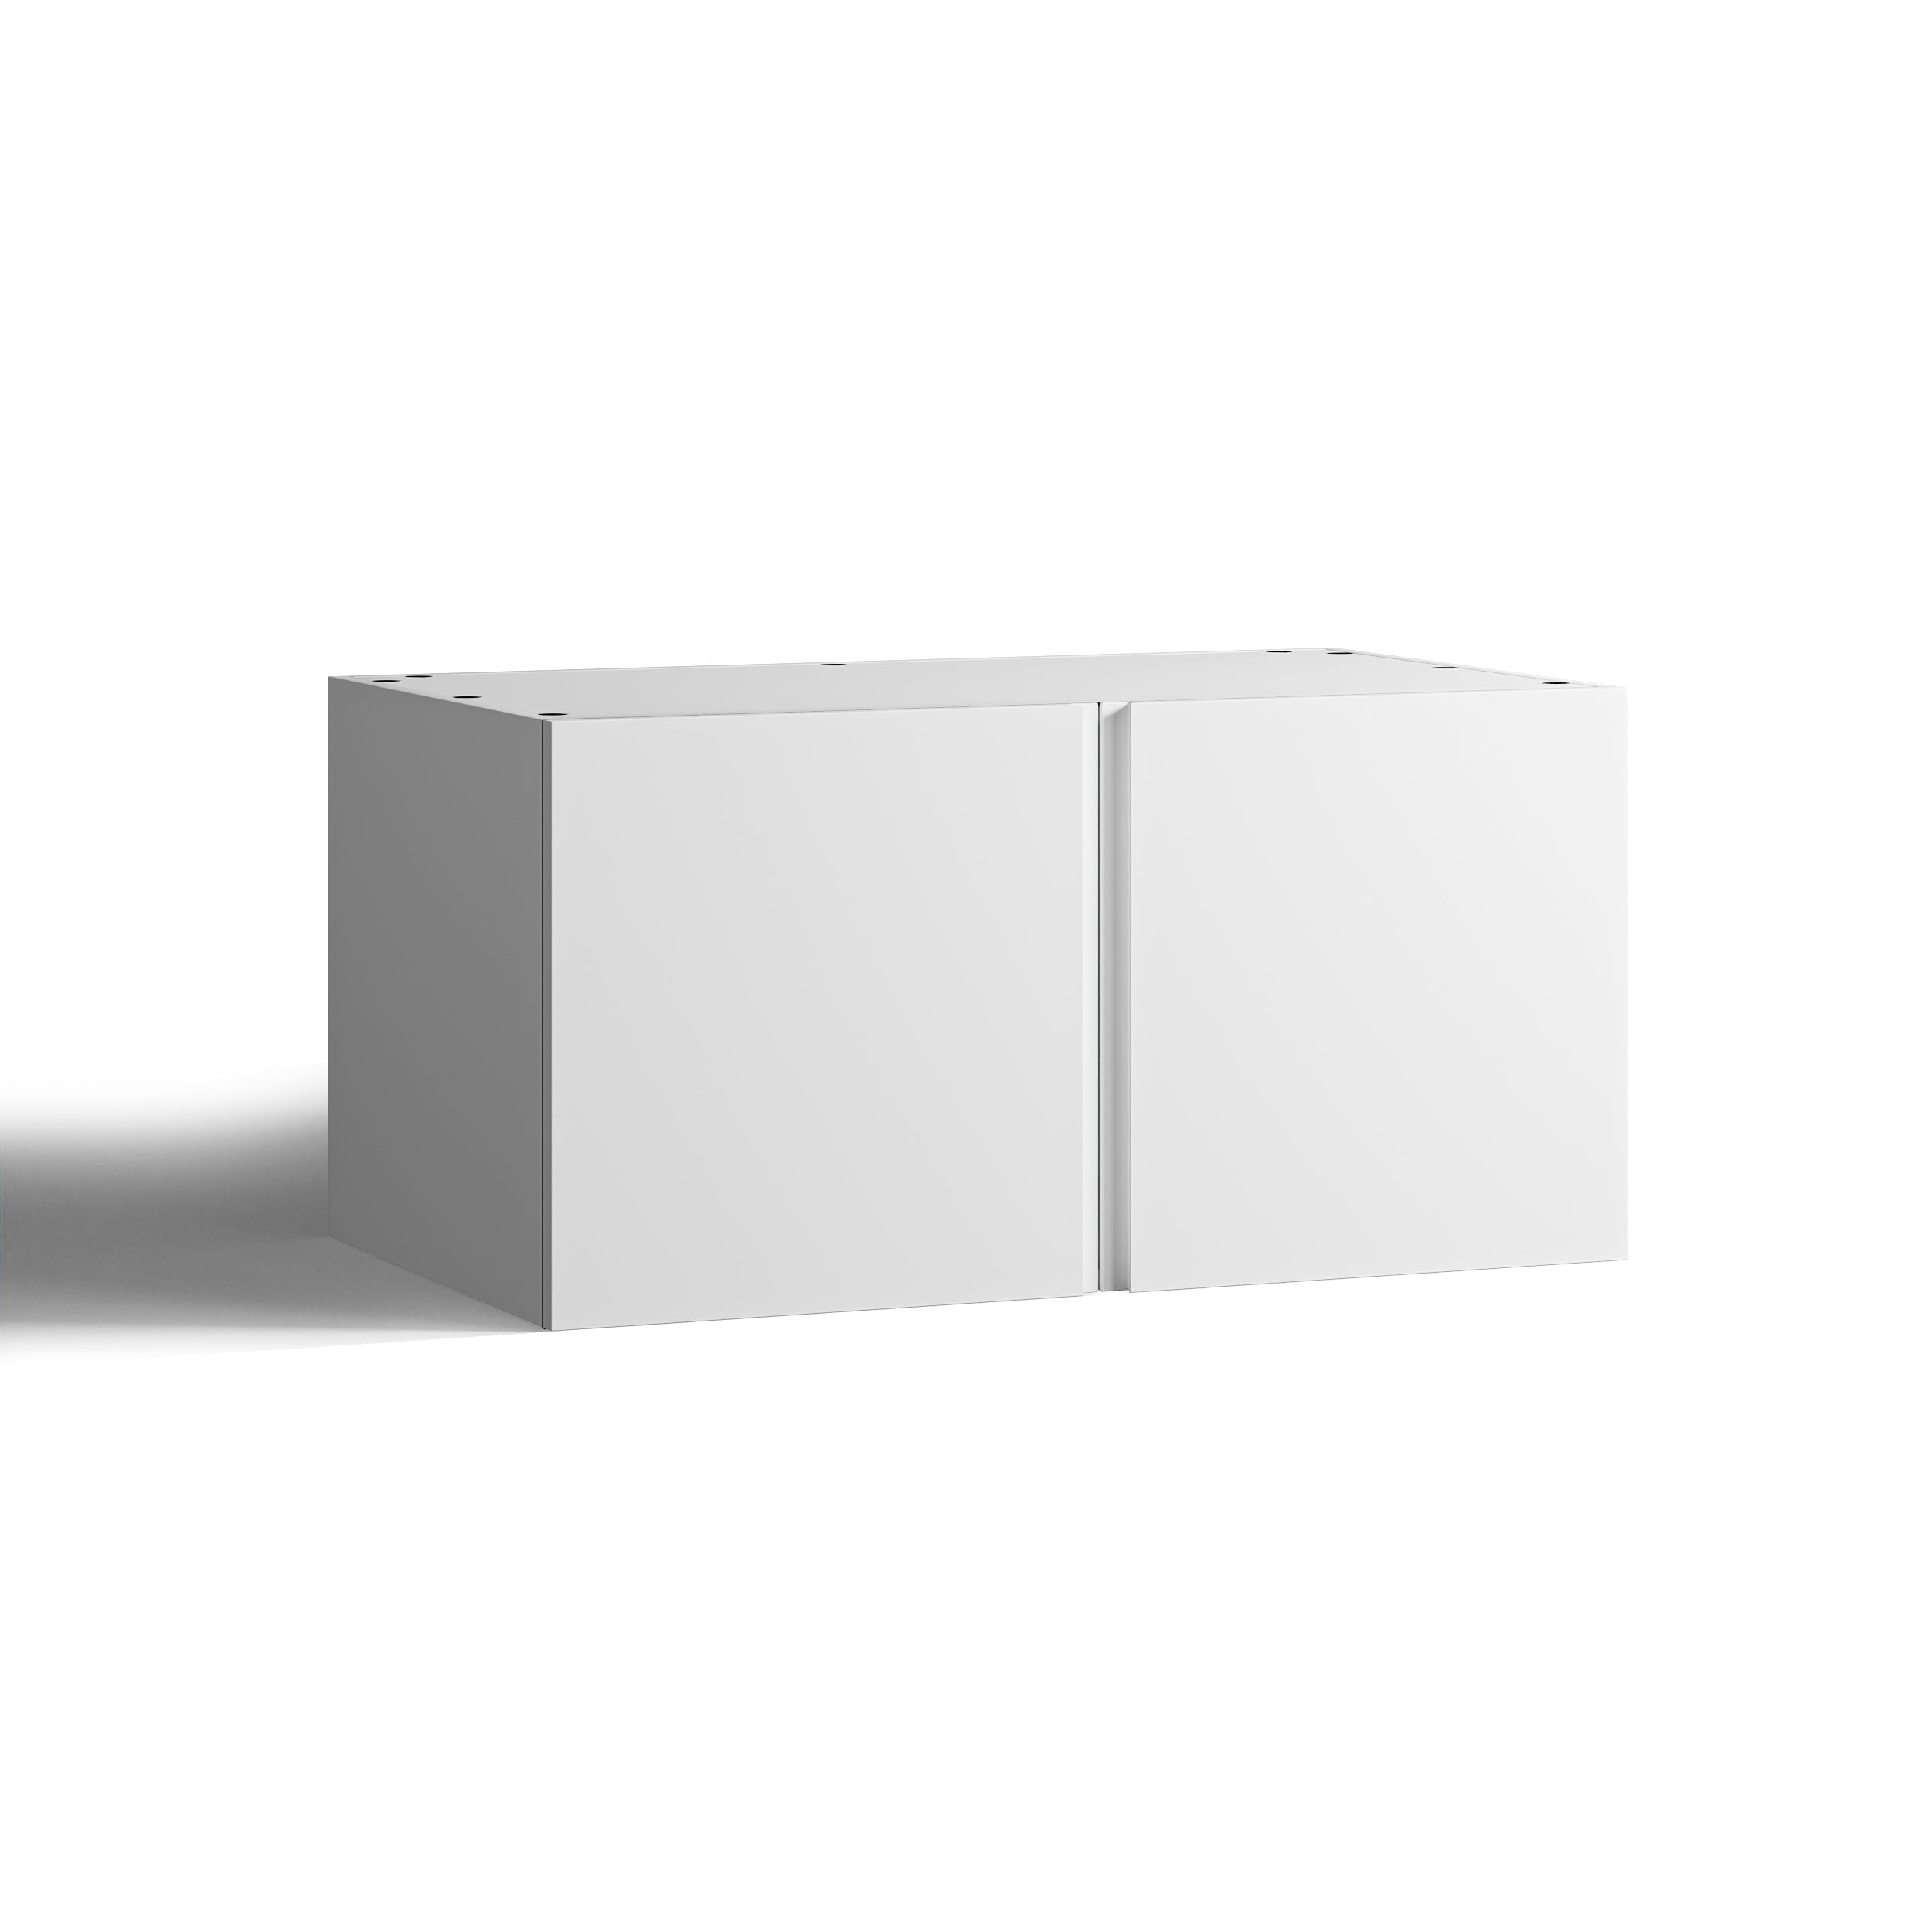 100x50 - Cabinet (58cm D) w 2 Doors - Finger Pull - PAX